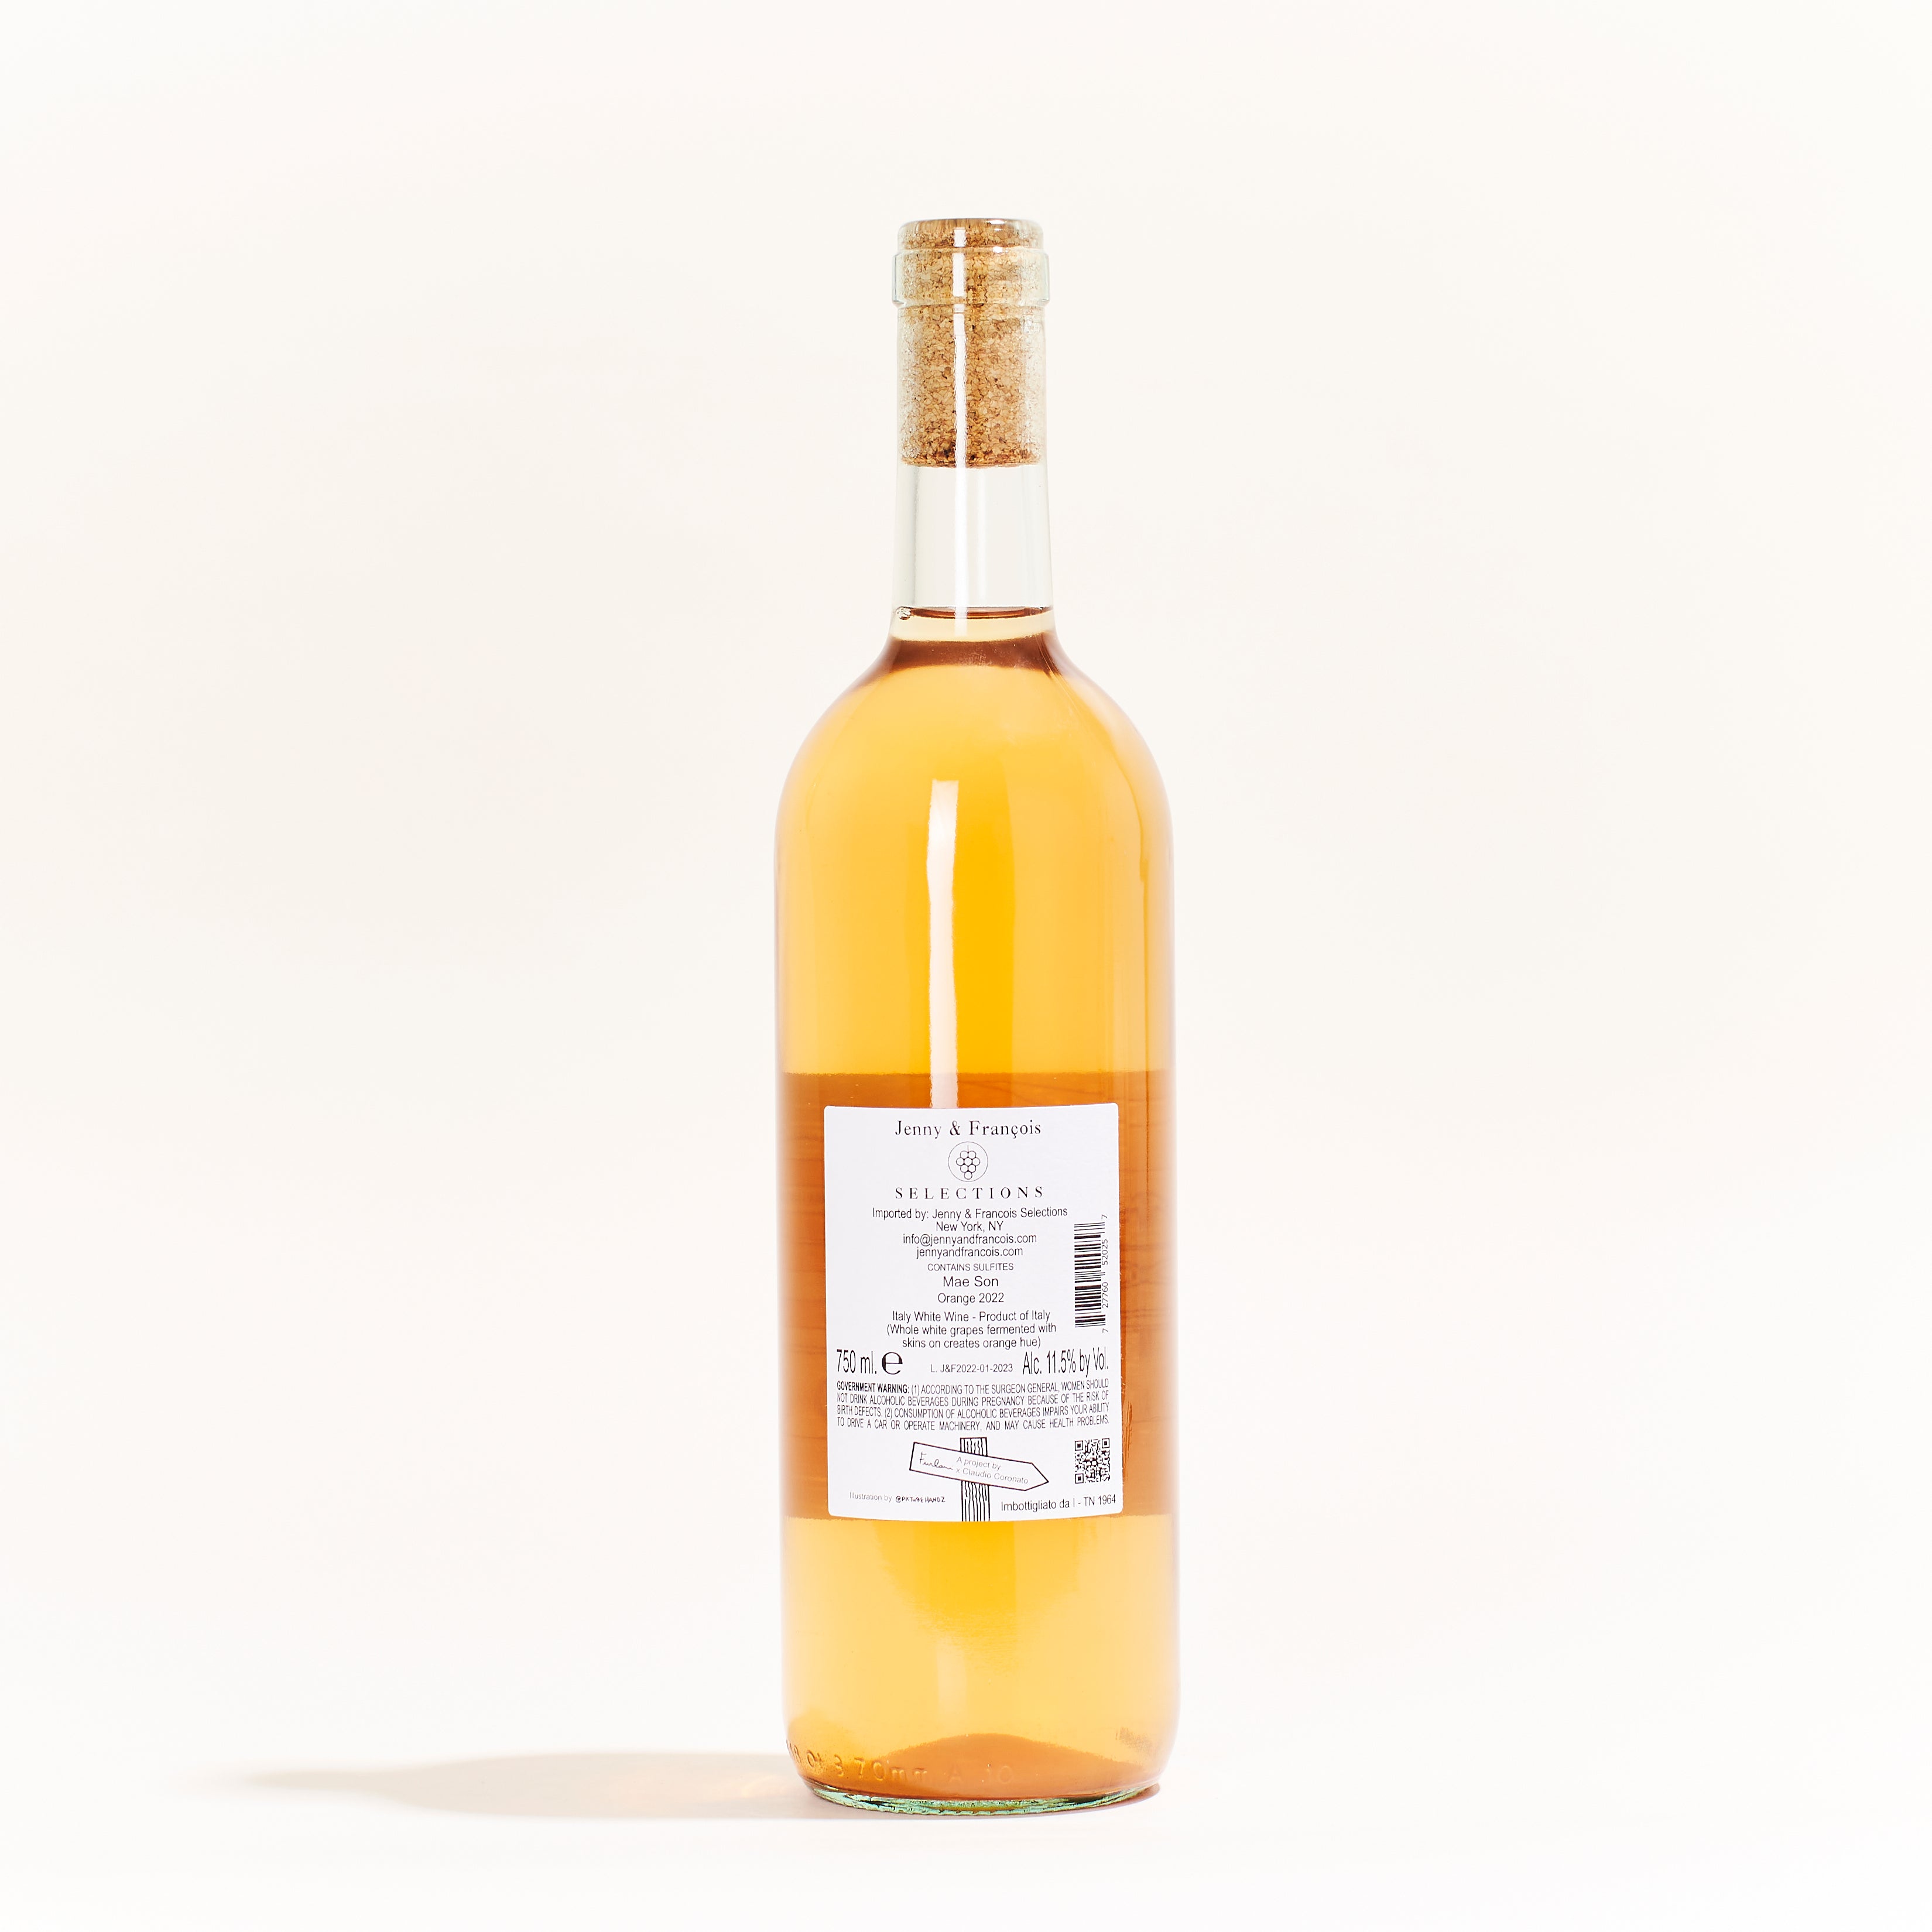 Mae-Son-Orange-Muller-Thurgau-natural-orange-wine-Alto-Italy-back-label